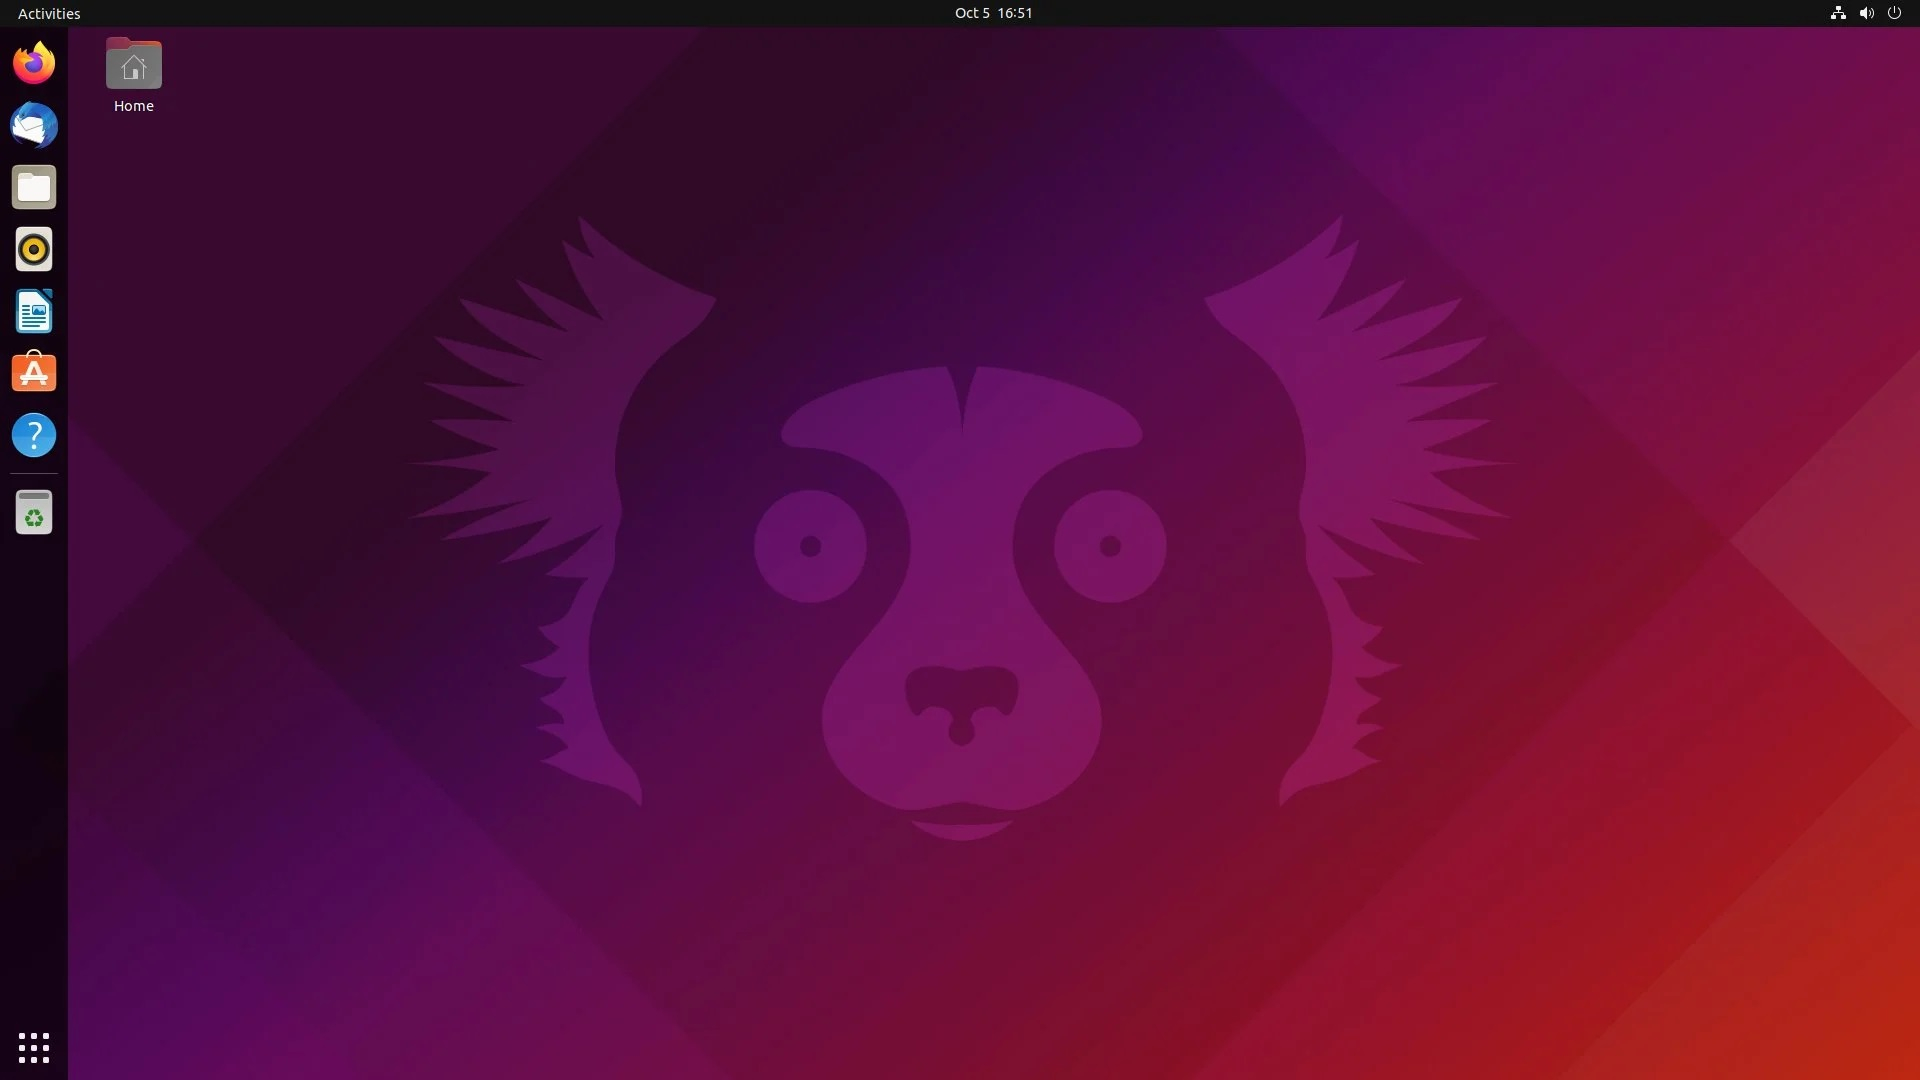 Il desktop di Ubuntu 21.10